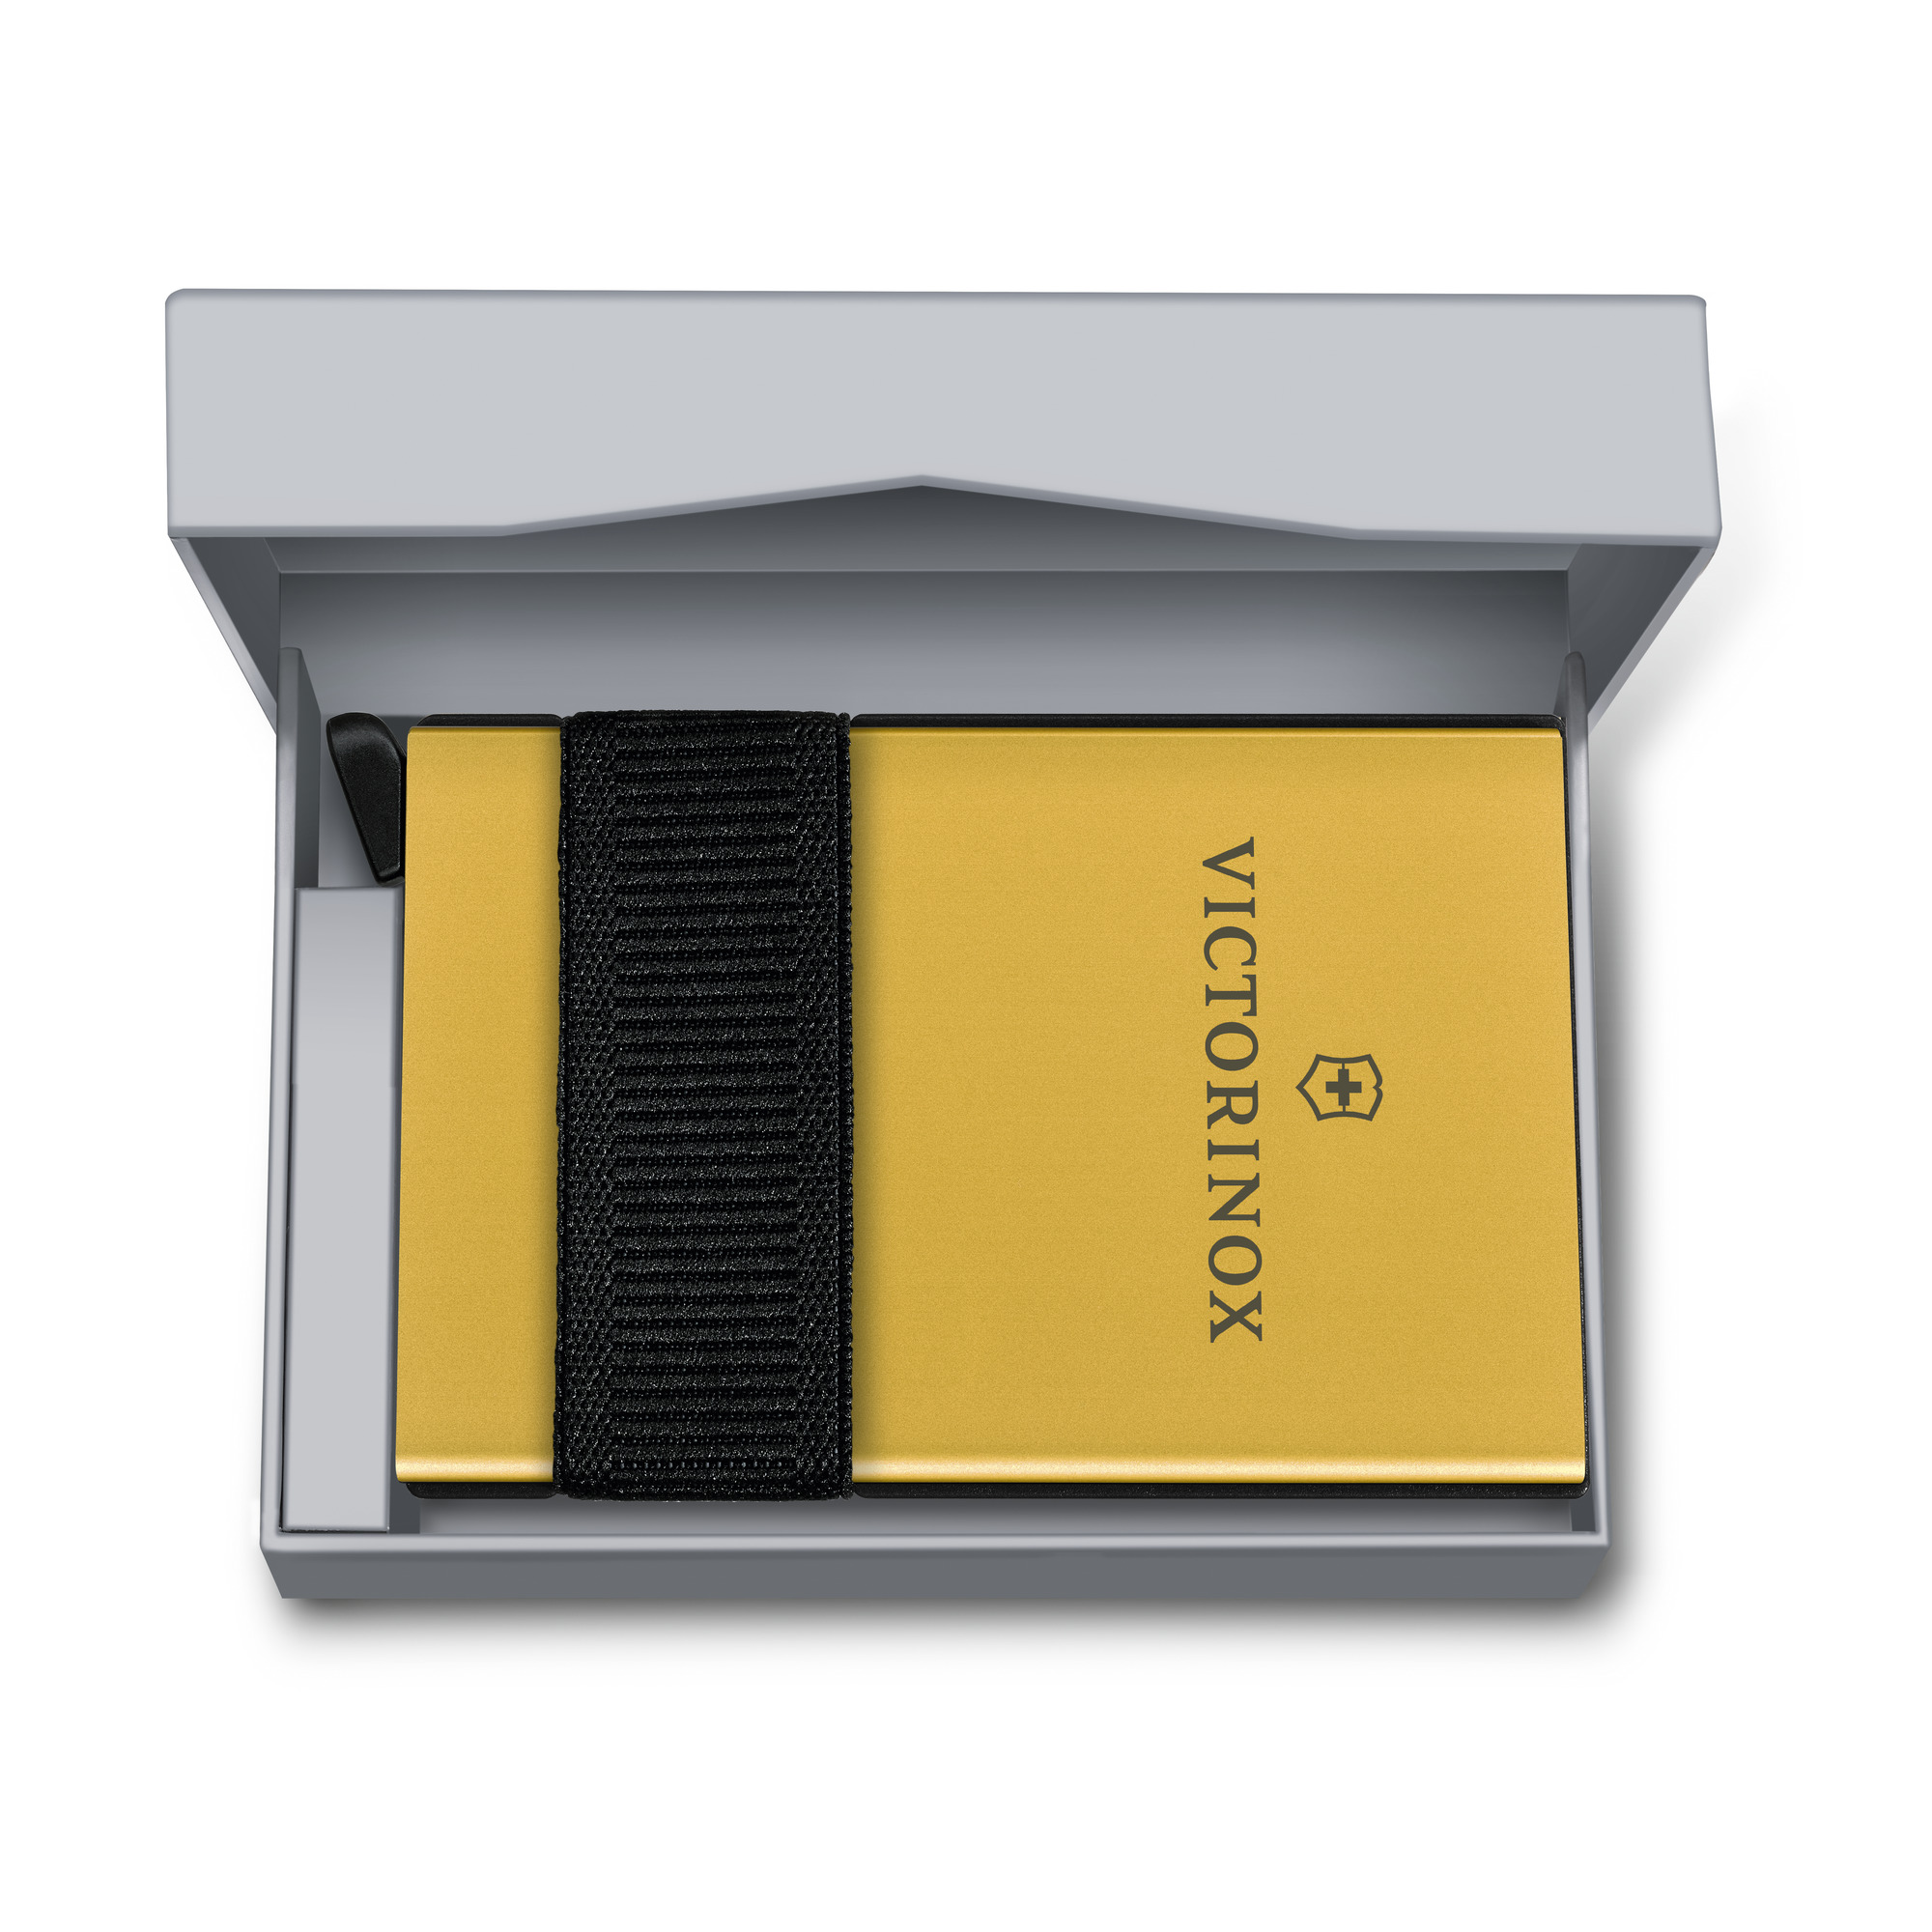 Victorinox Smart Card Wallet,Delightful Gold